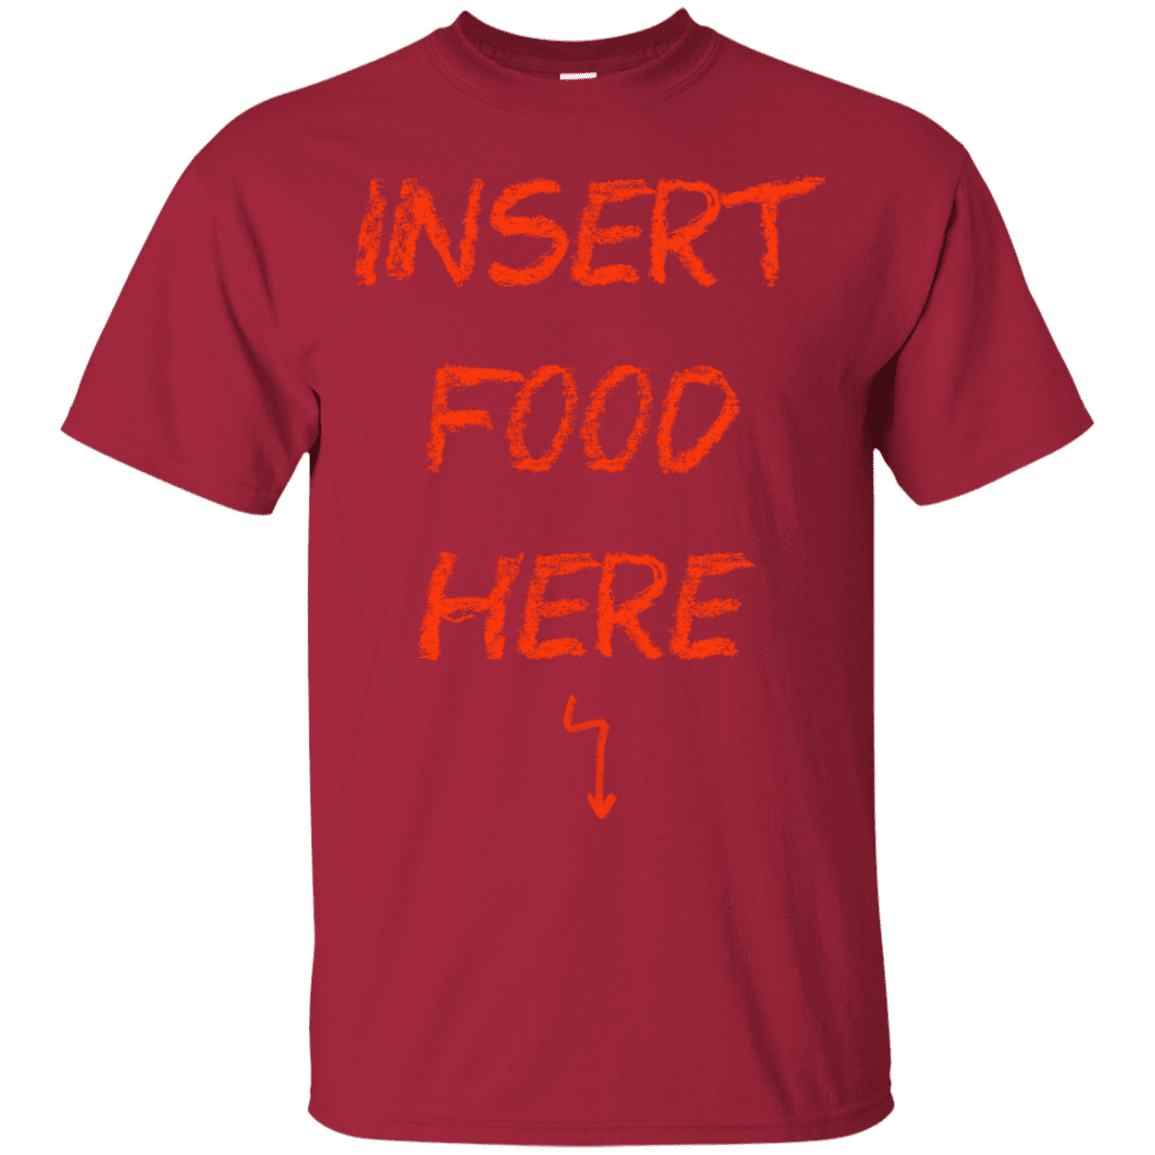 T-Shirts Cardinal / S Insert Food T-Shirt